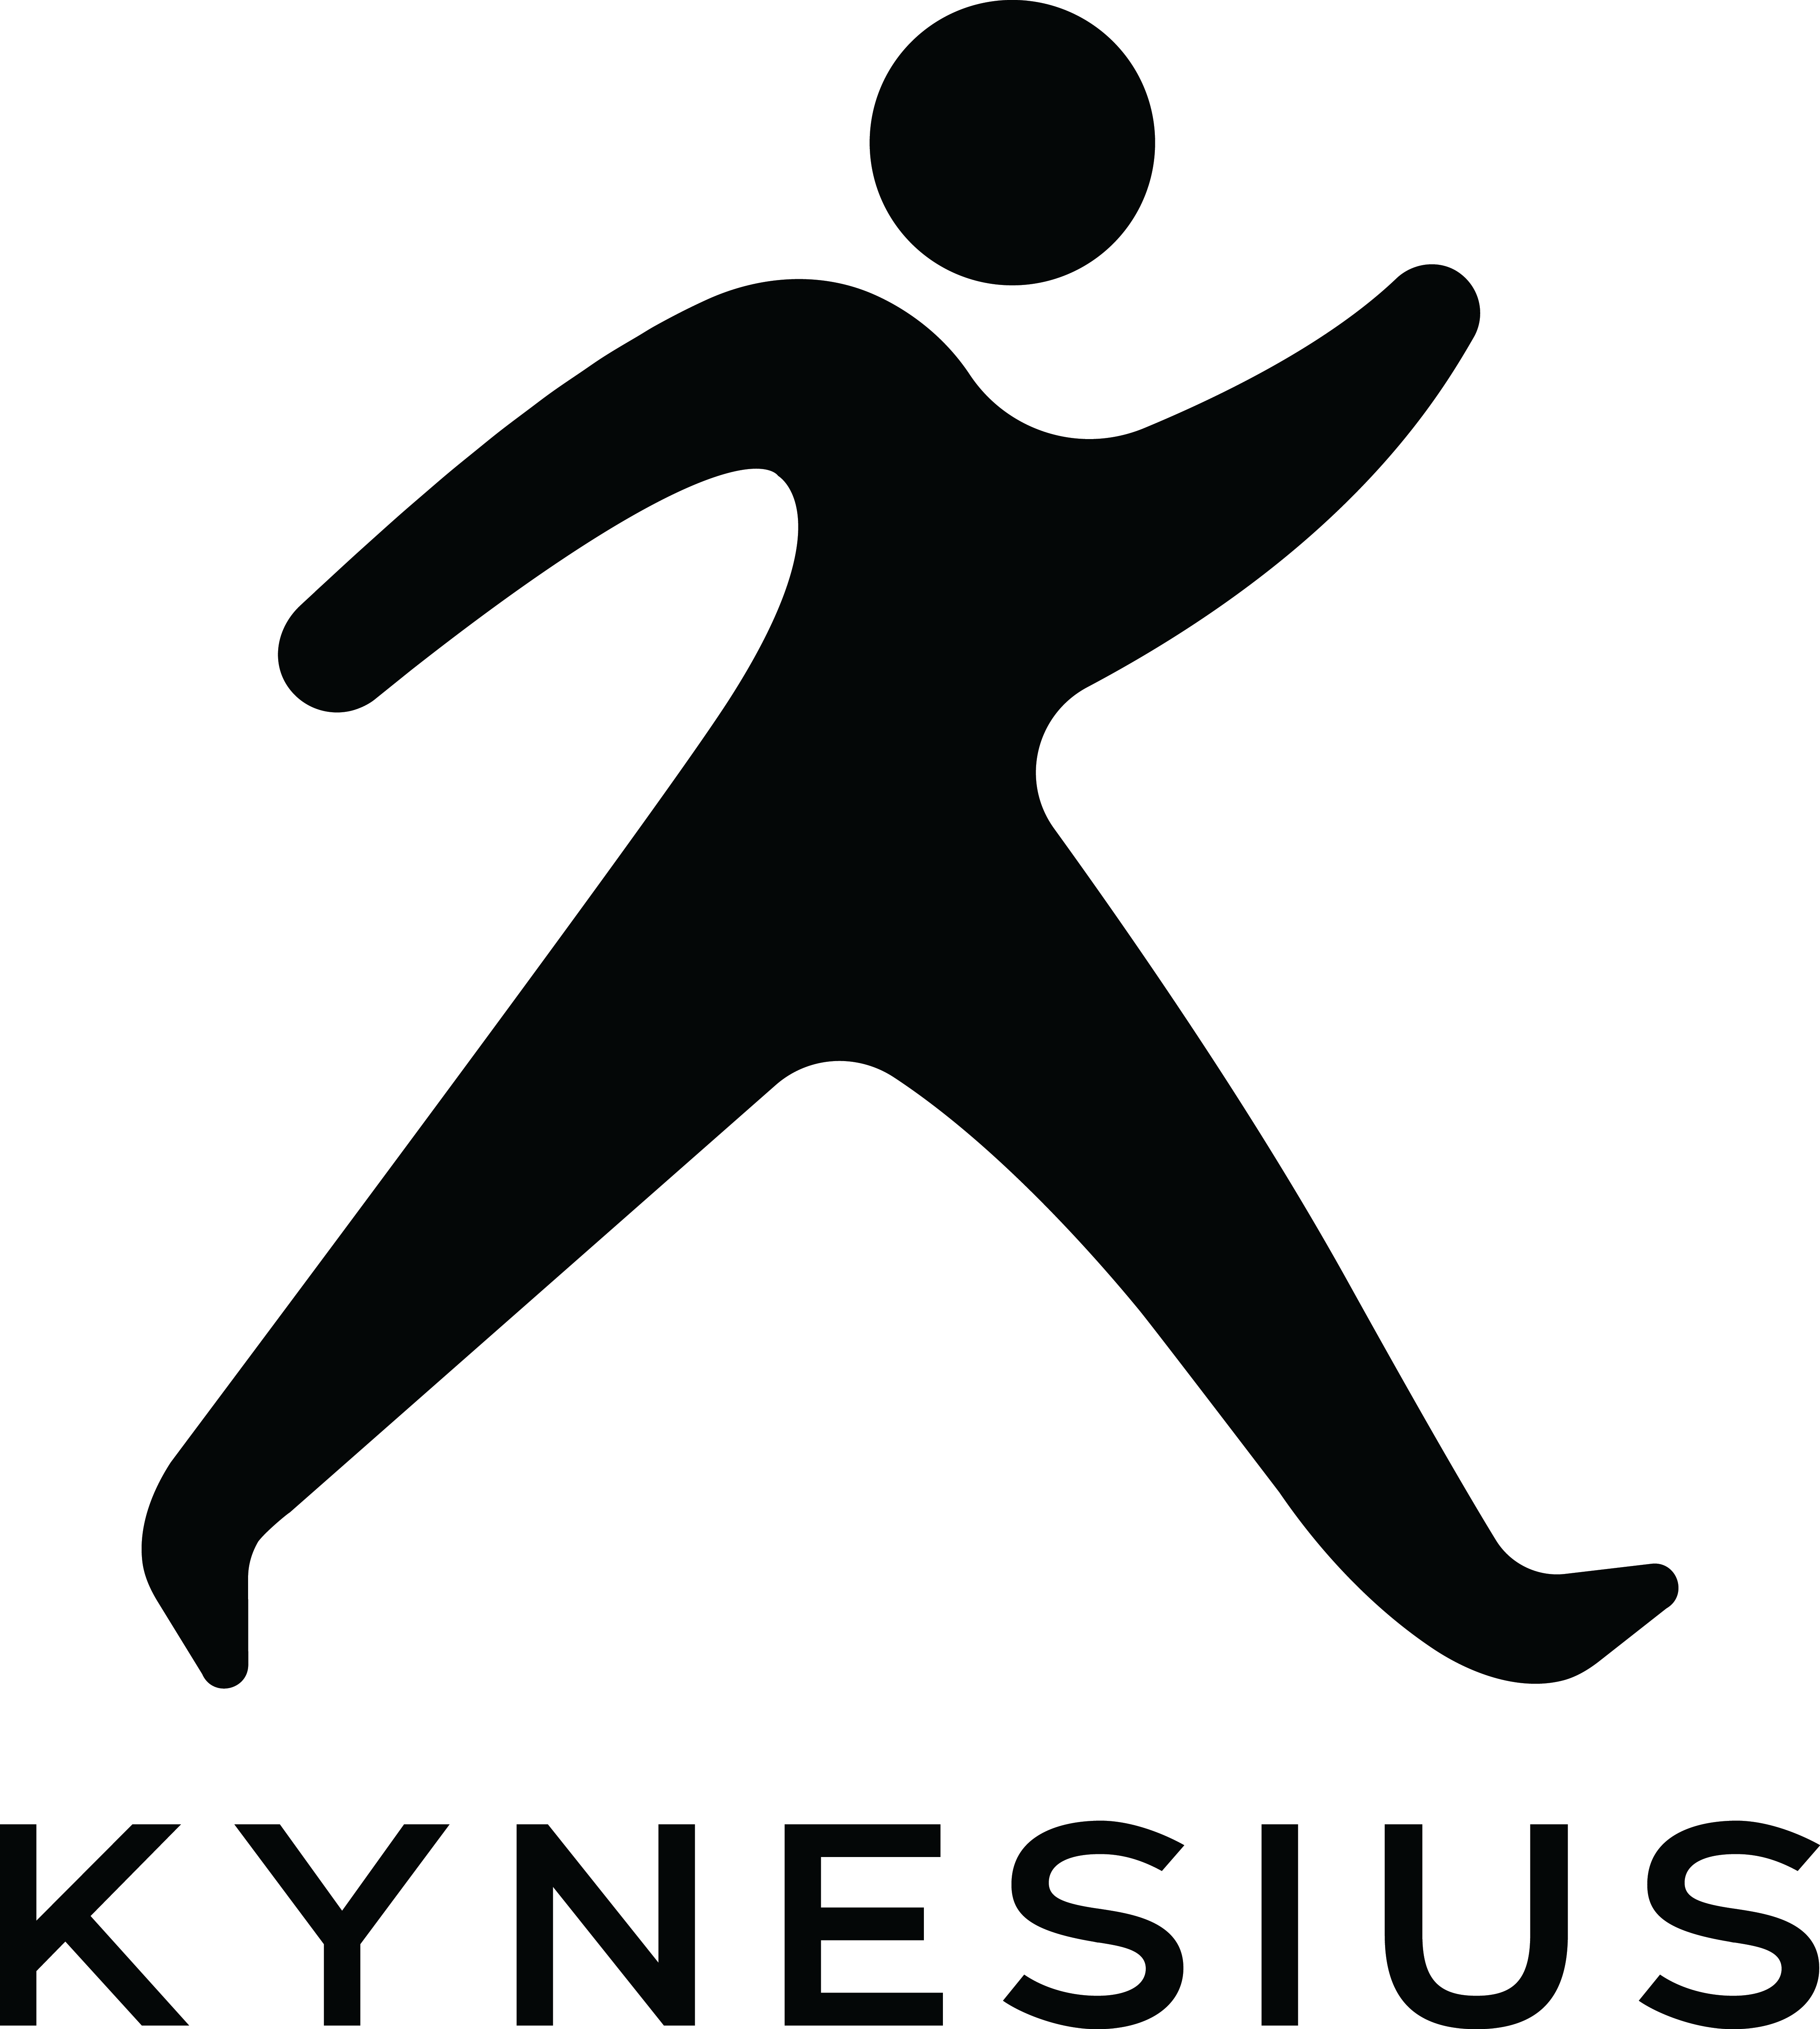 KYNESIUS